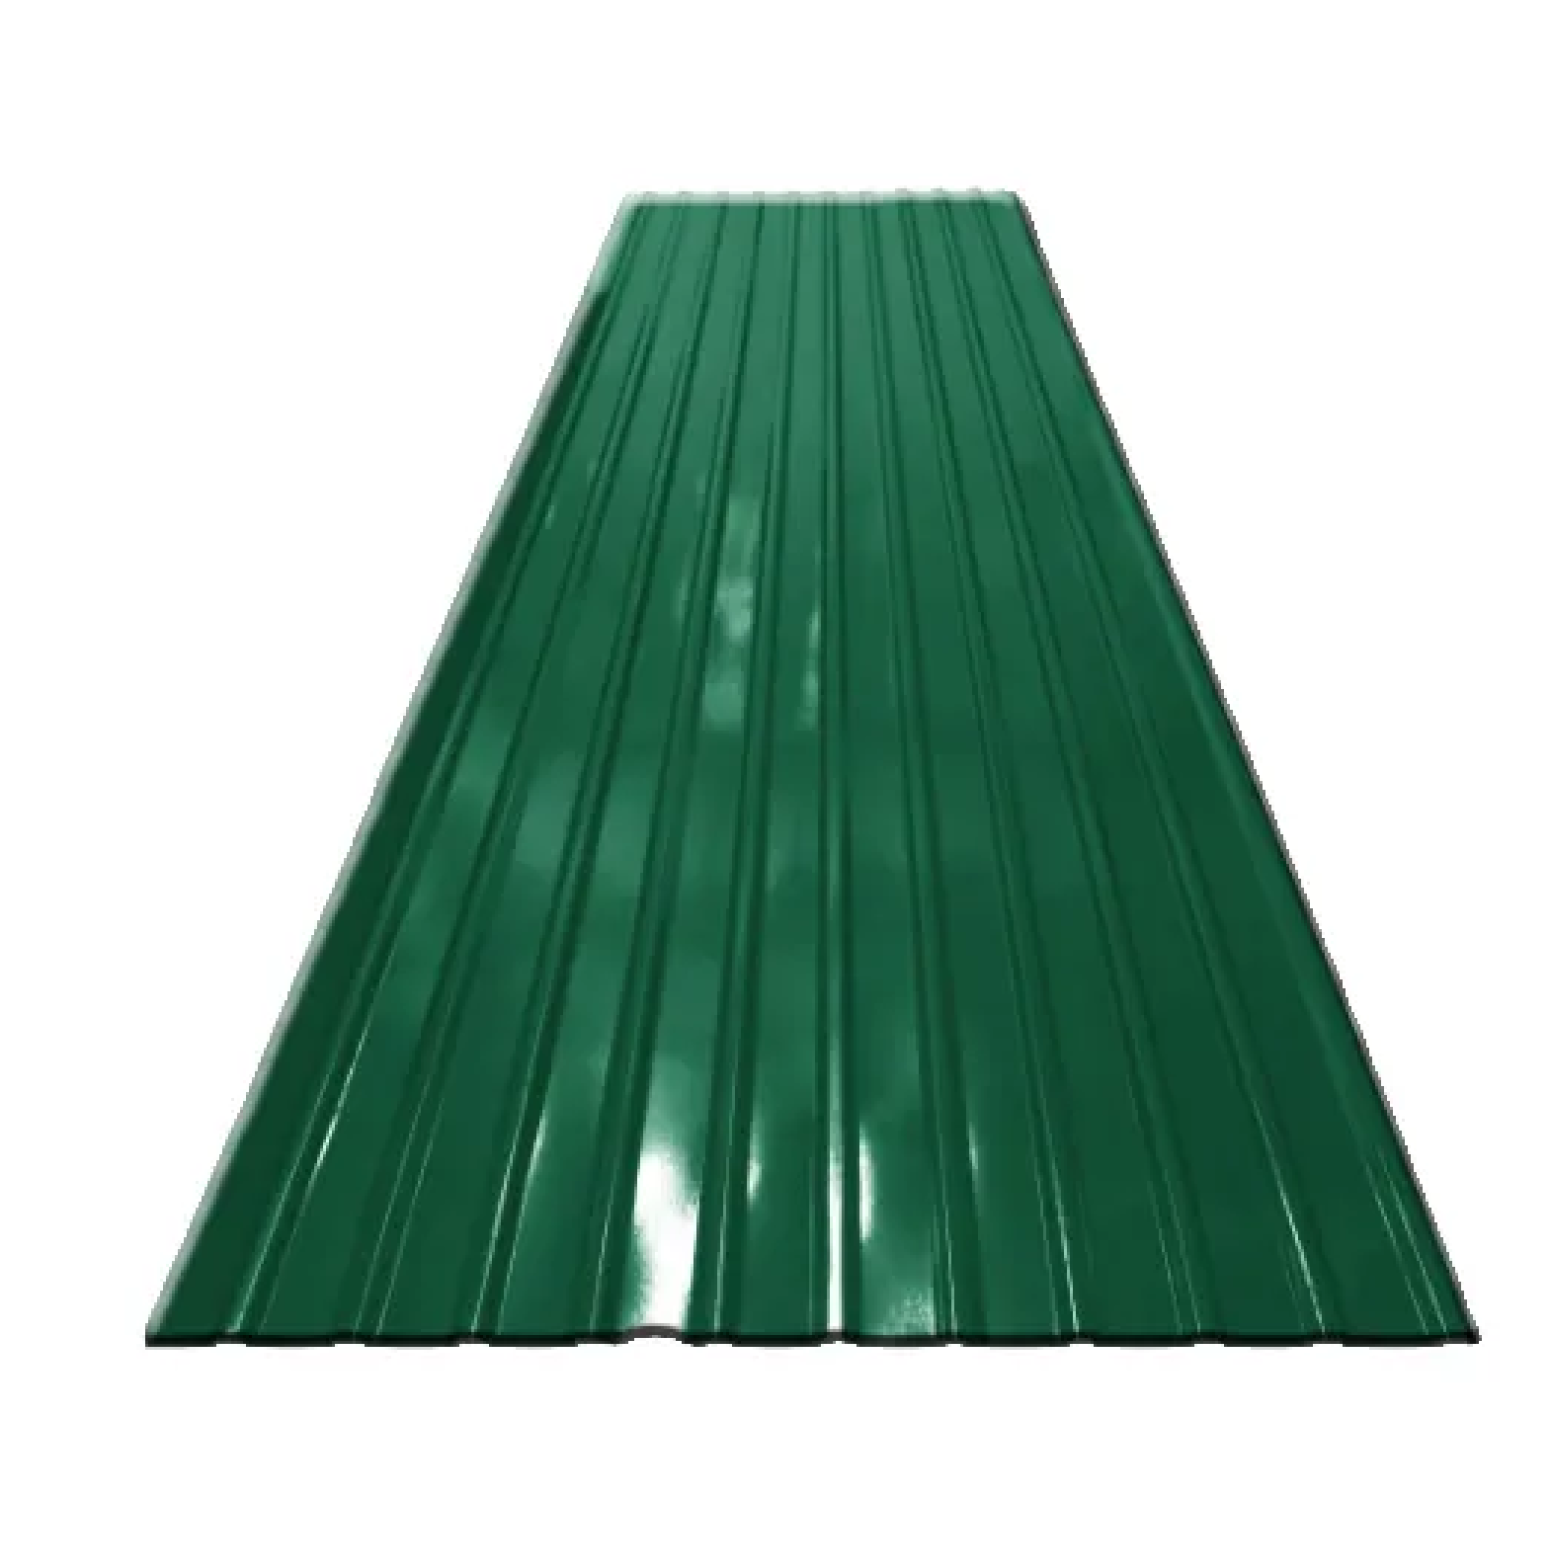 3 D galvanized economical model square corrugated green 6 feet